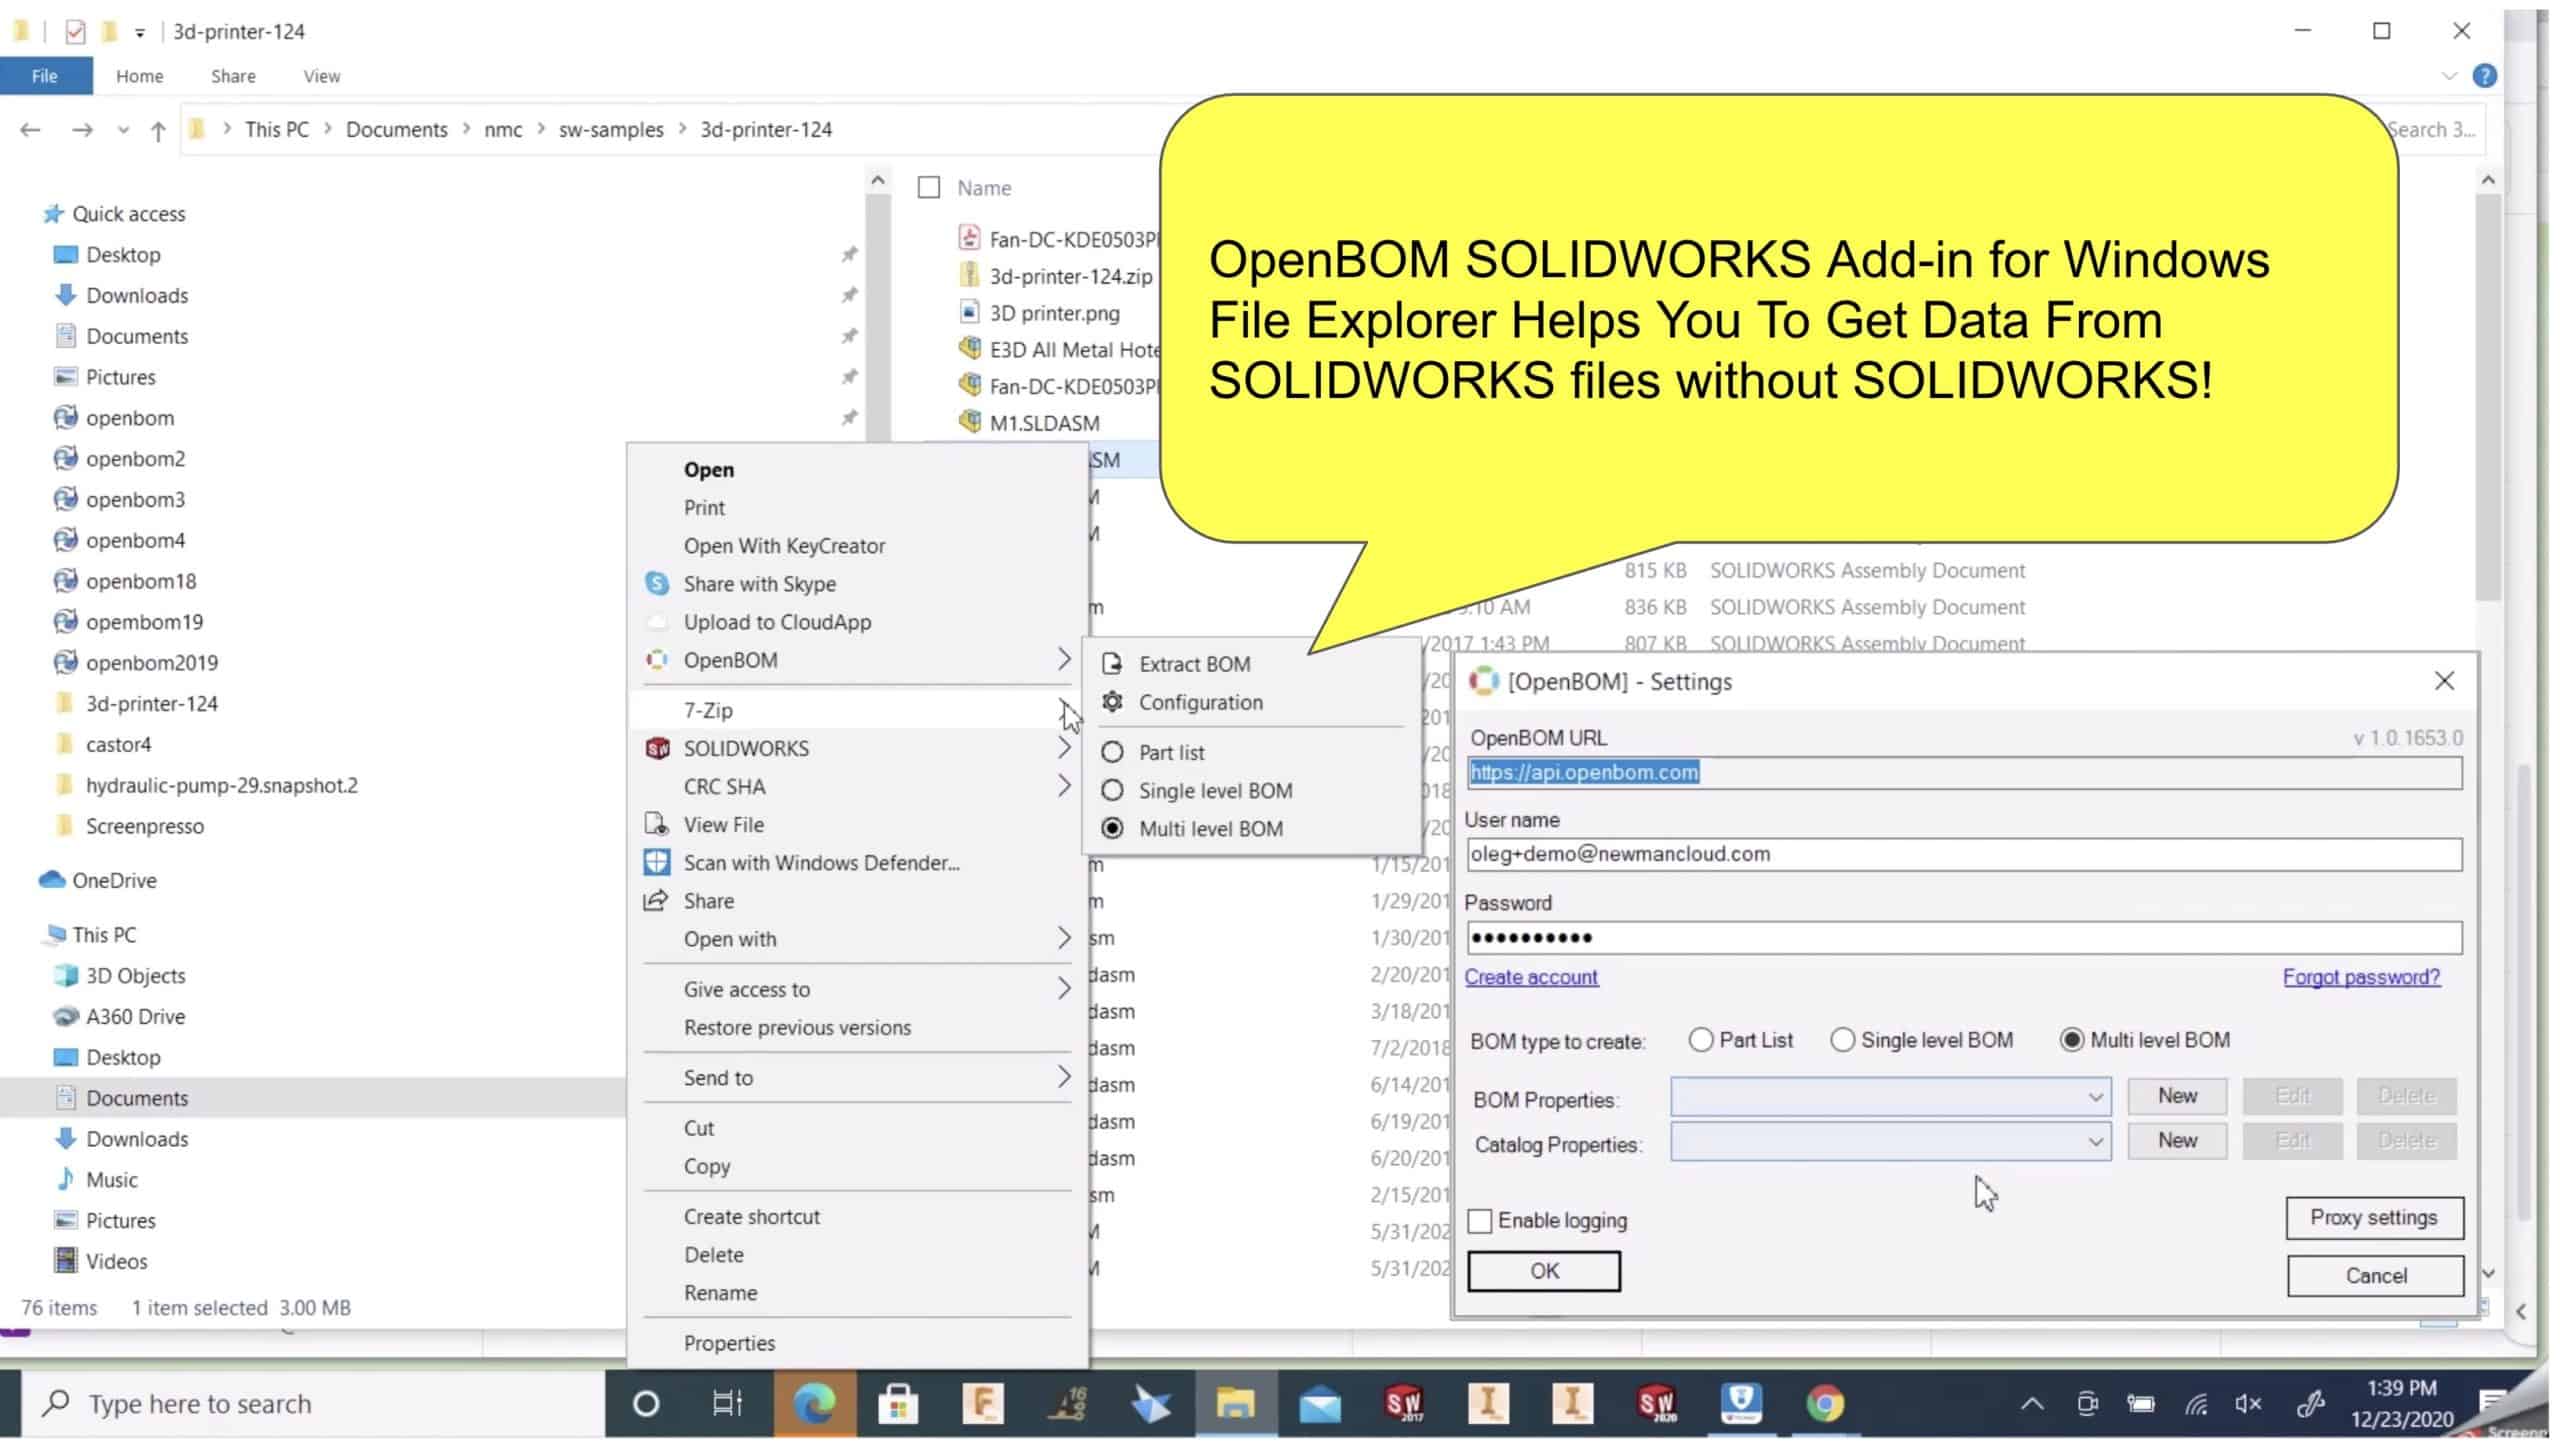 SOLIDWORKS Add-in For Windows File Explorer